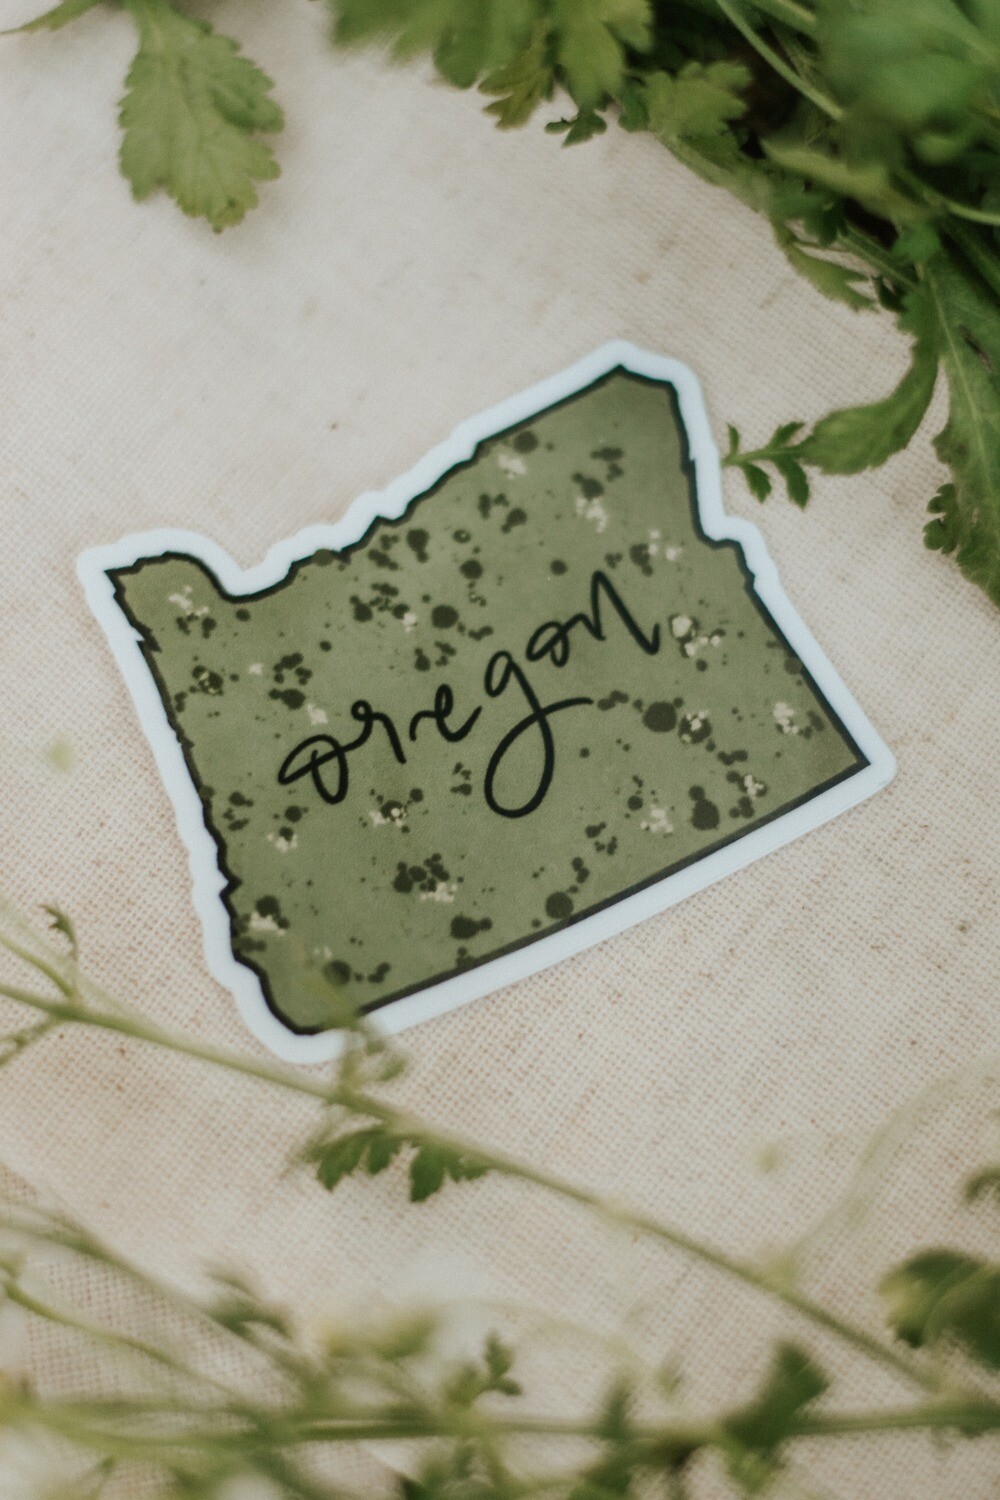 Our Green Oregon Sticker